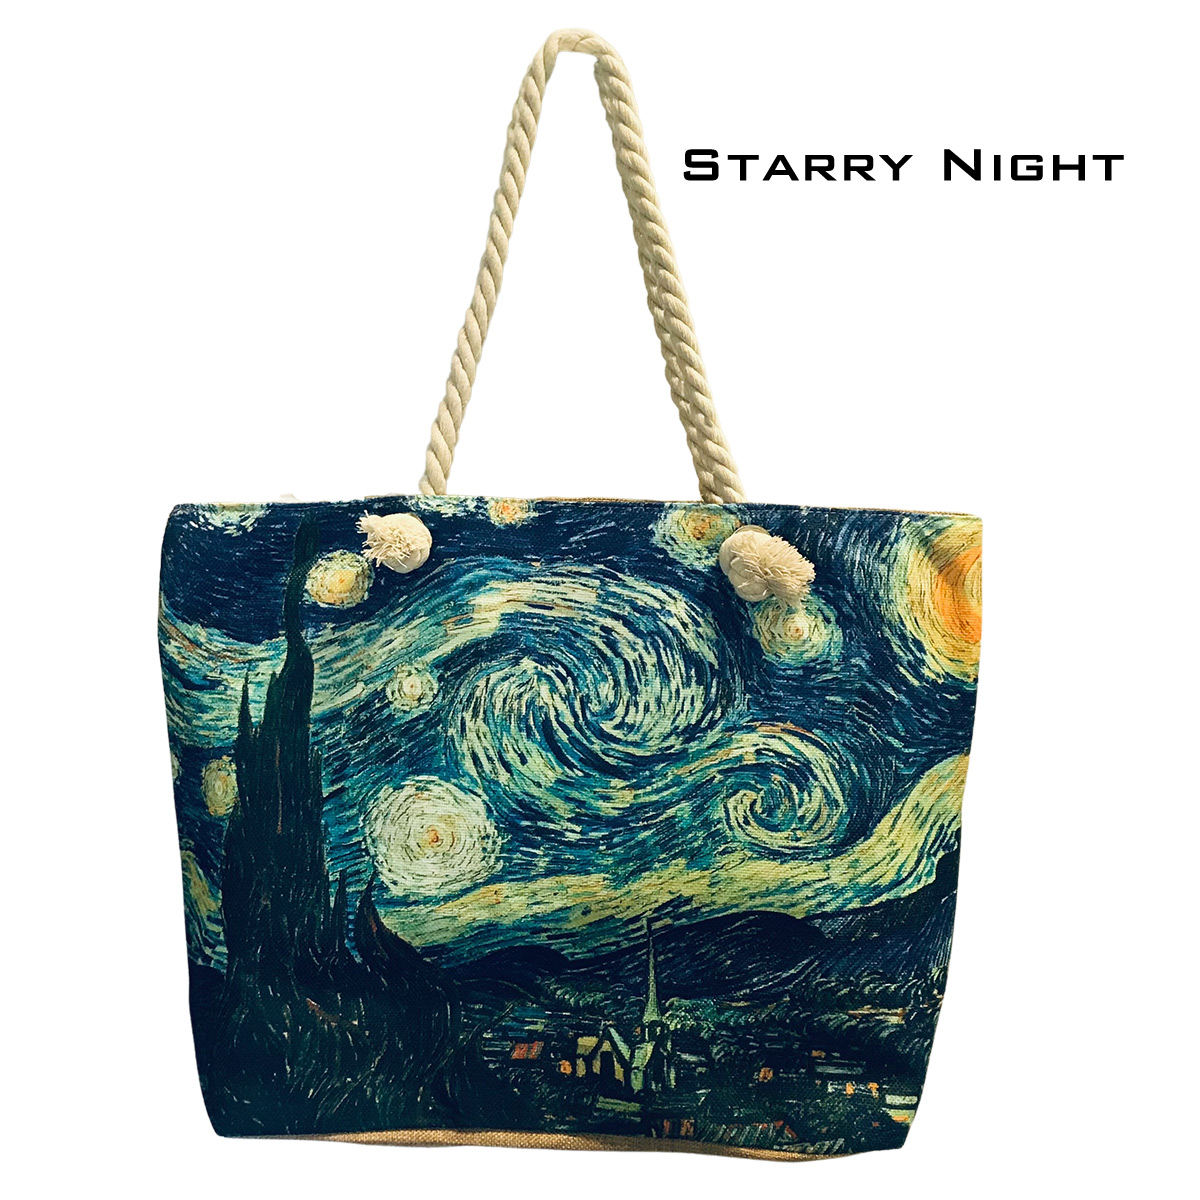 Starry Night (Vincent Van Gogh)